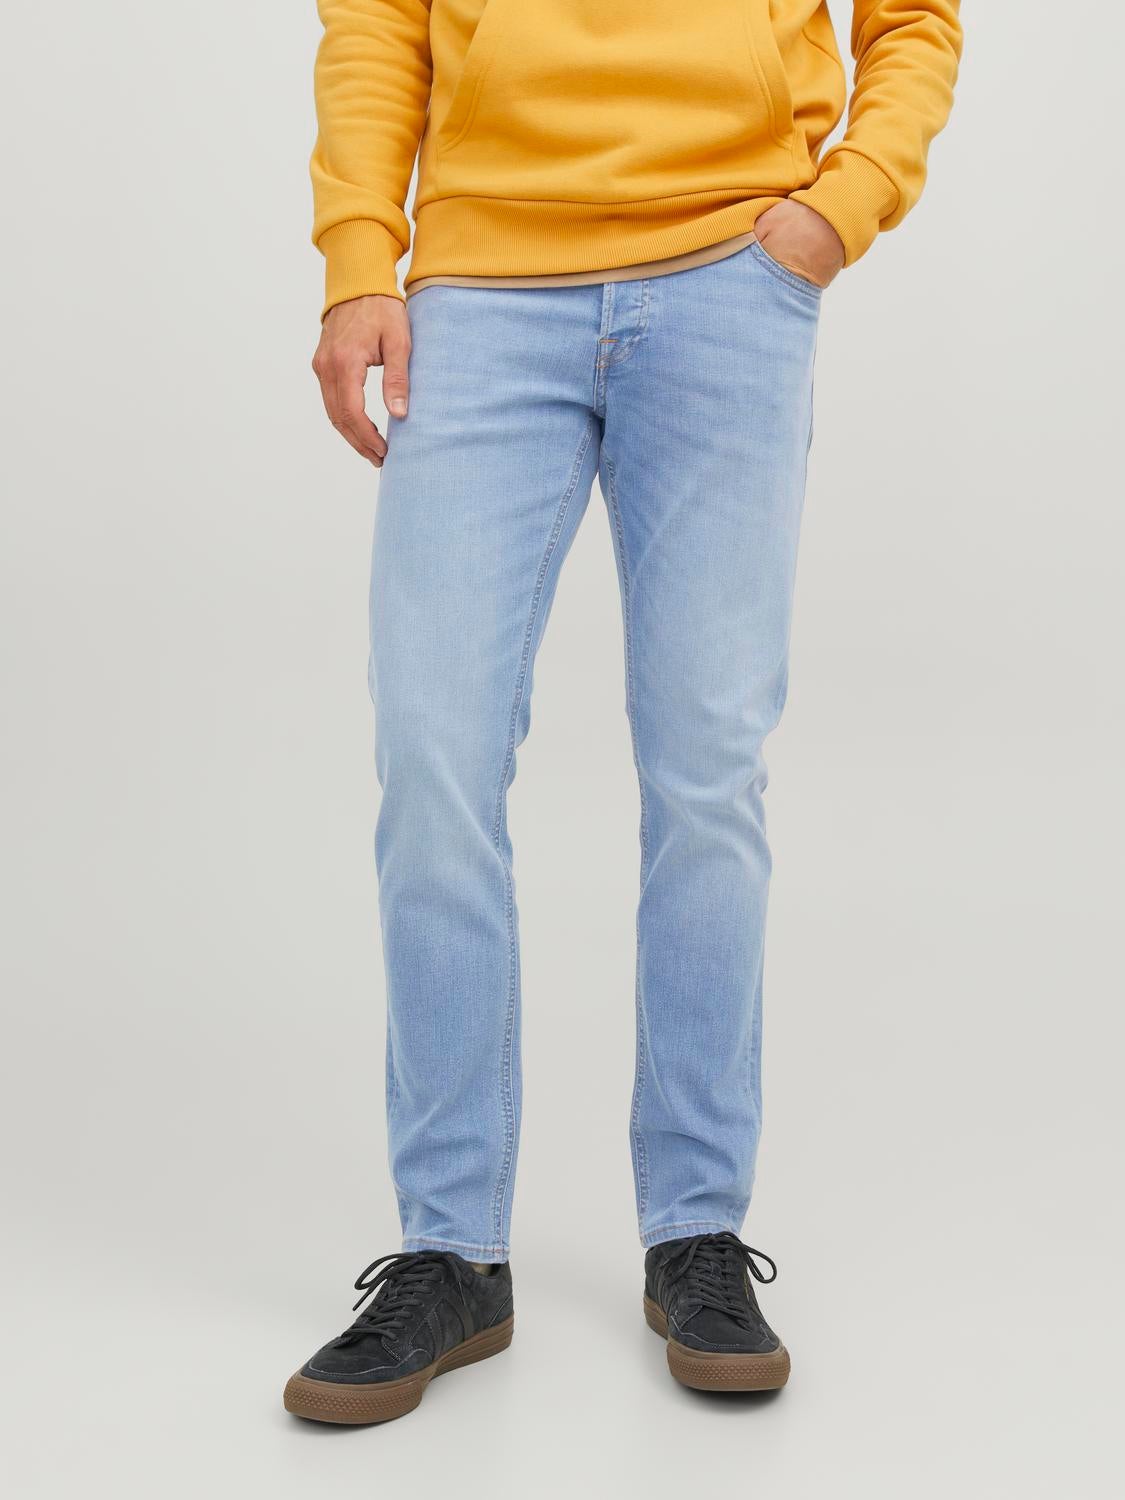 Maison Margiela Bleached Denim Slim Fit Jeans, $610 | Lane Crawford |  Lookastic